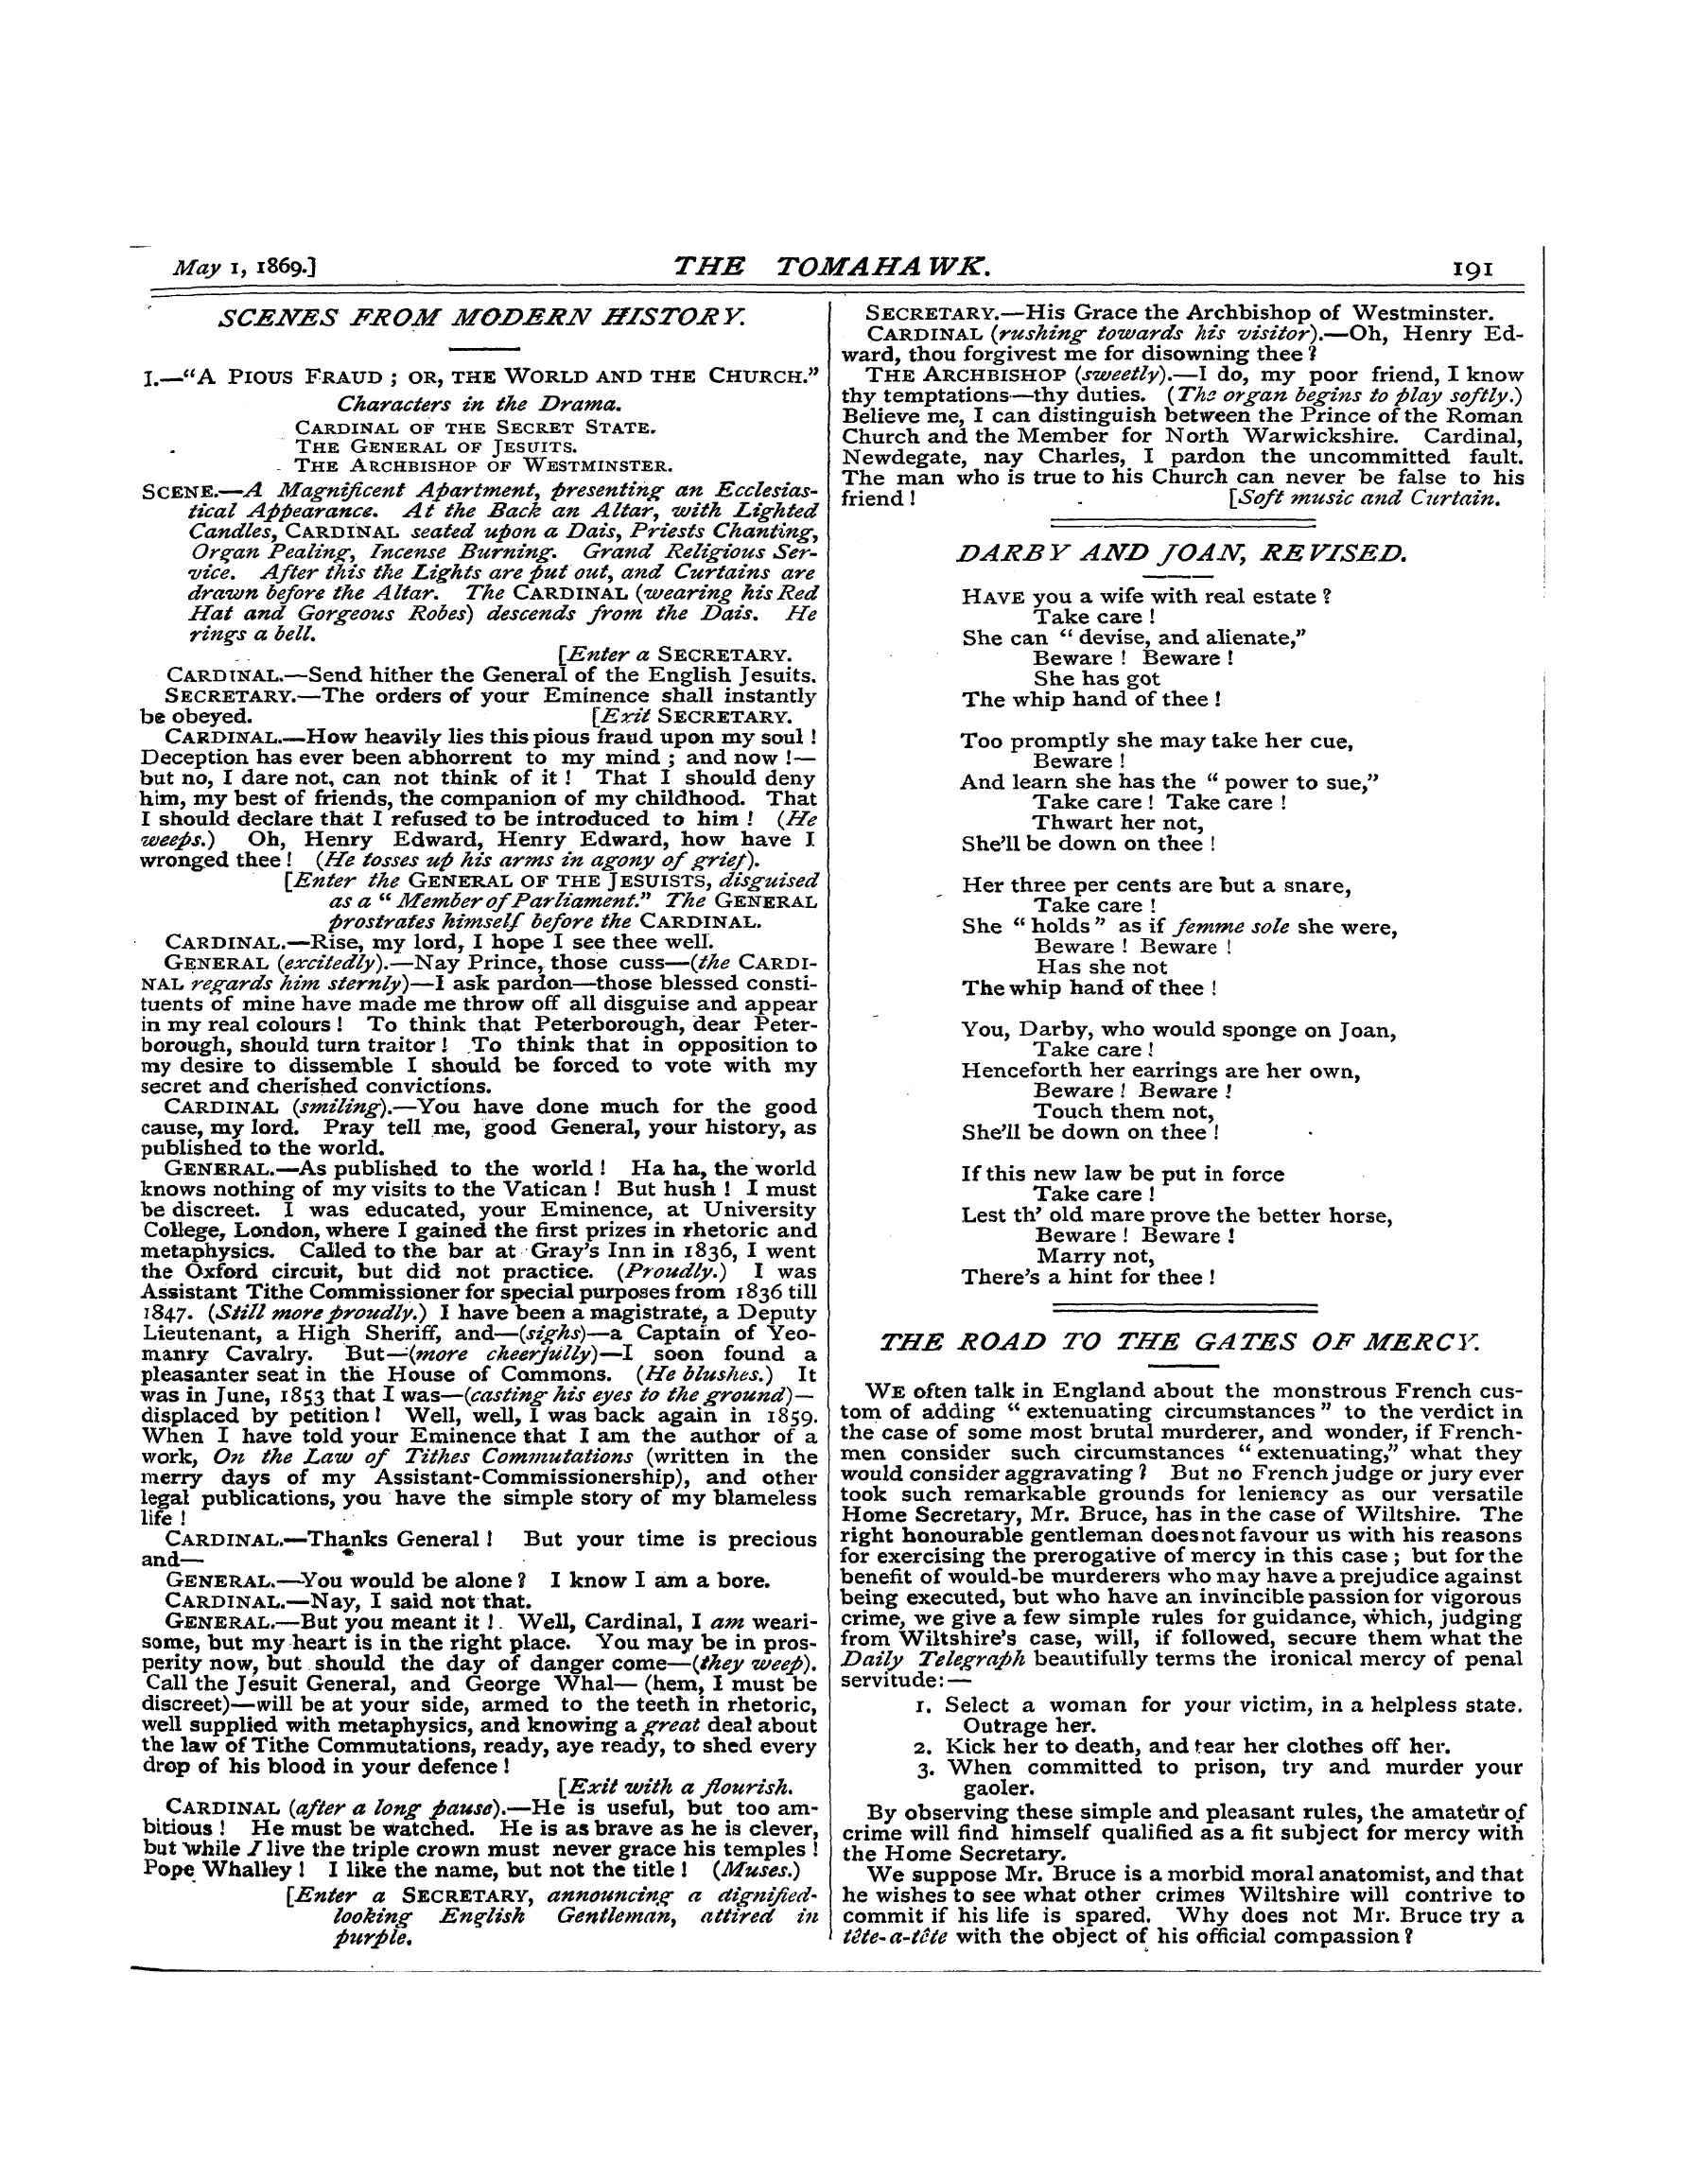 Tomahawk (1867-1870): jS F Y, 1st edition - May I, 1869.3 The Tqmaha Wk. 191